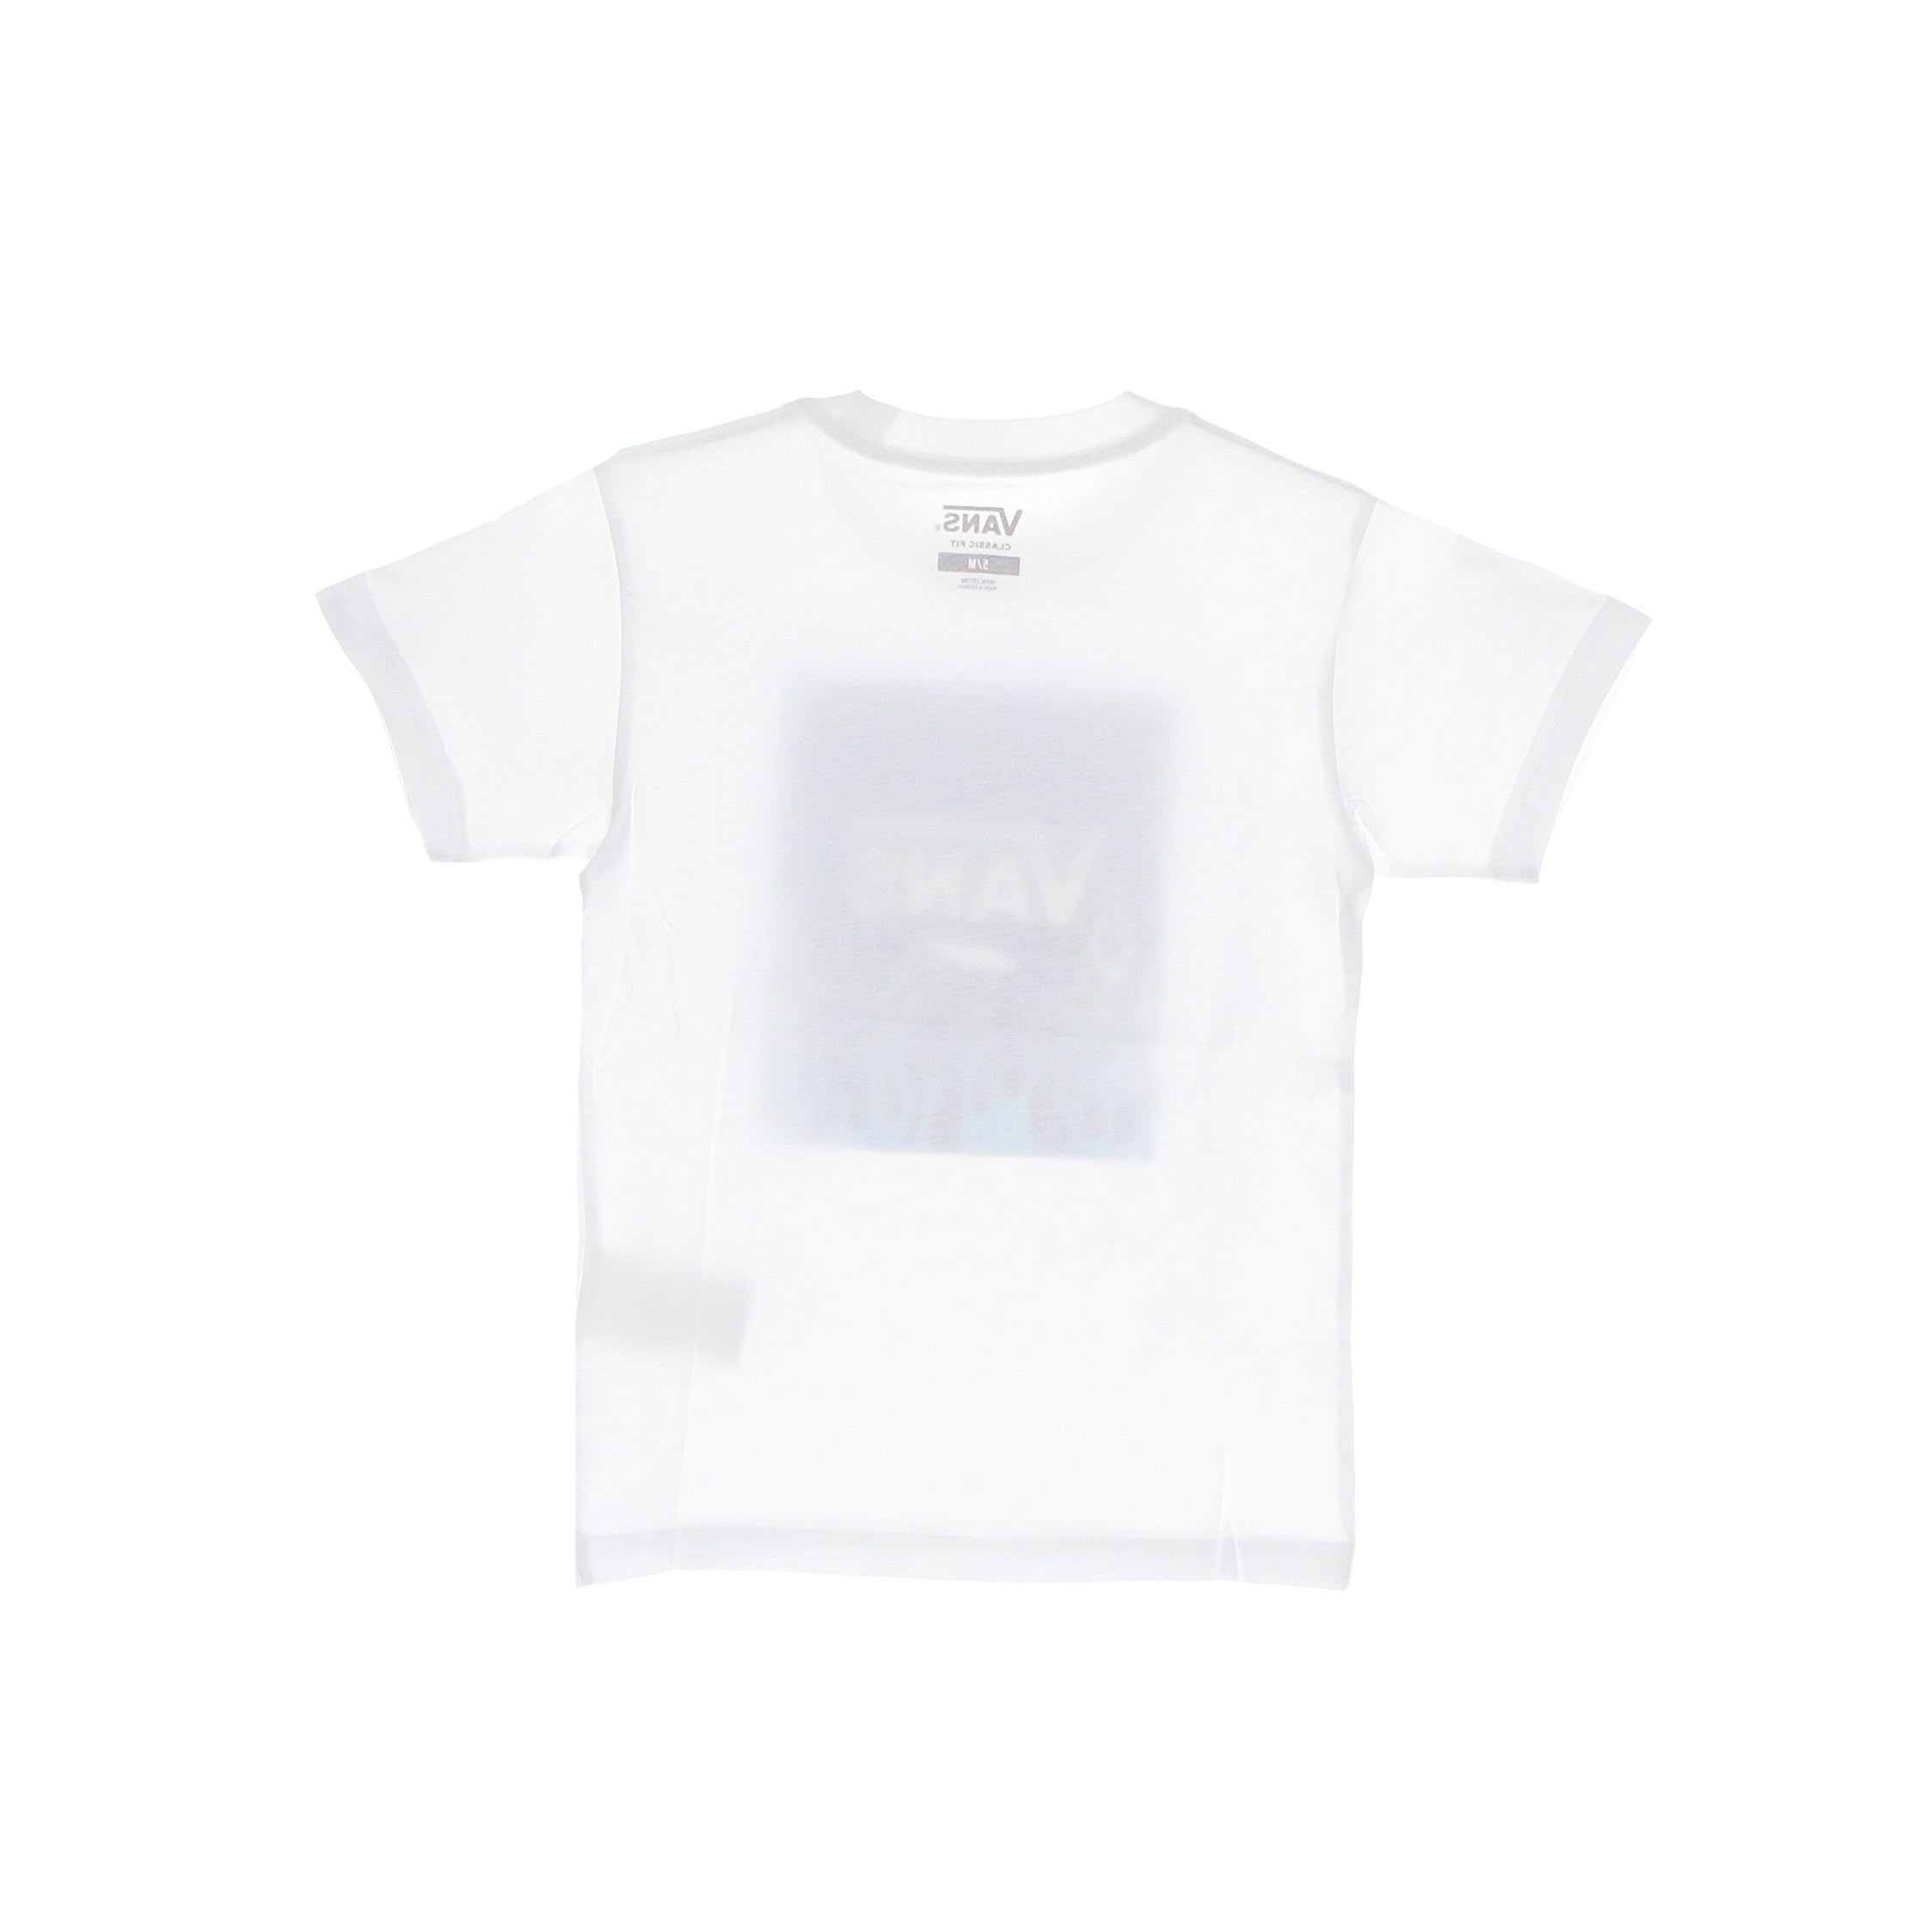 Print Box White/camo Flame Child T-shirt